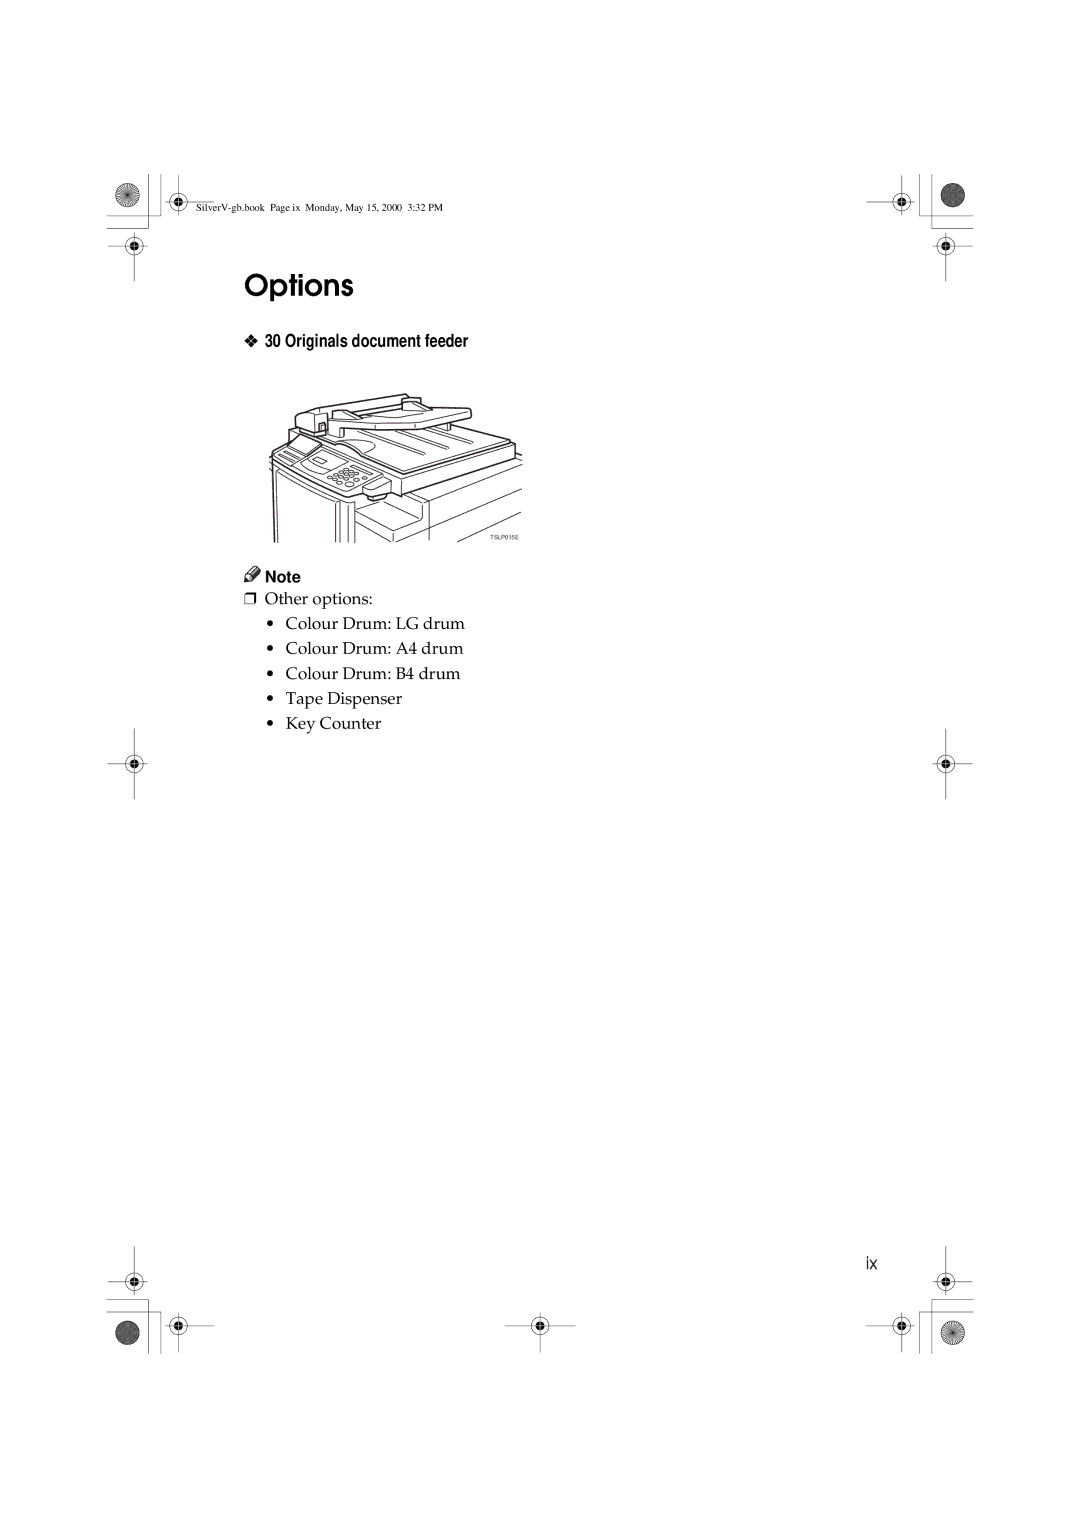 Ricoh JP1210/1250, Priport manual Options, Originals document feeder 